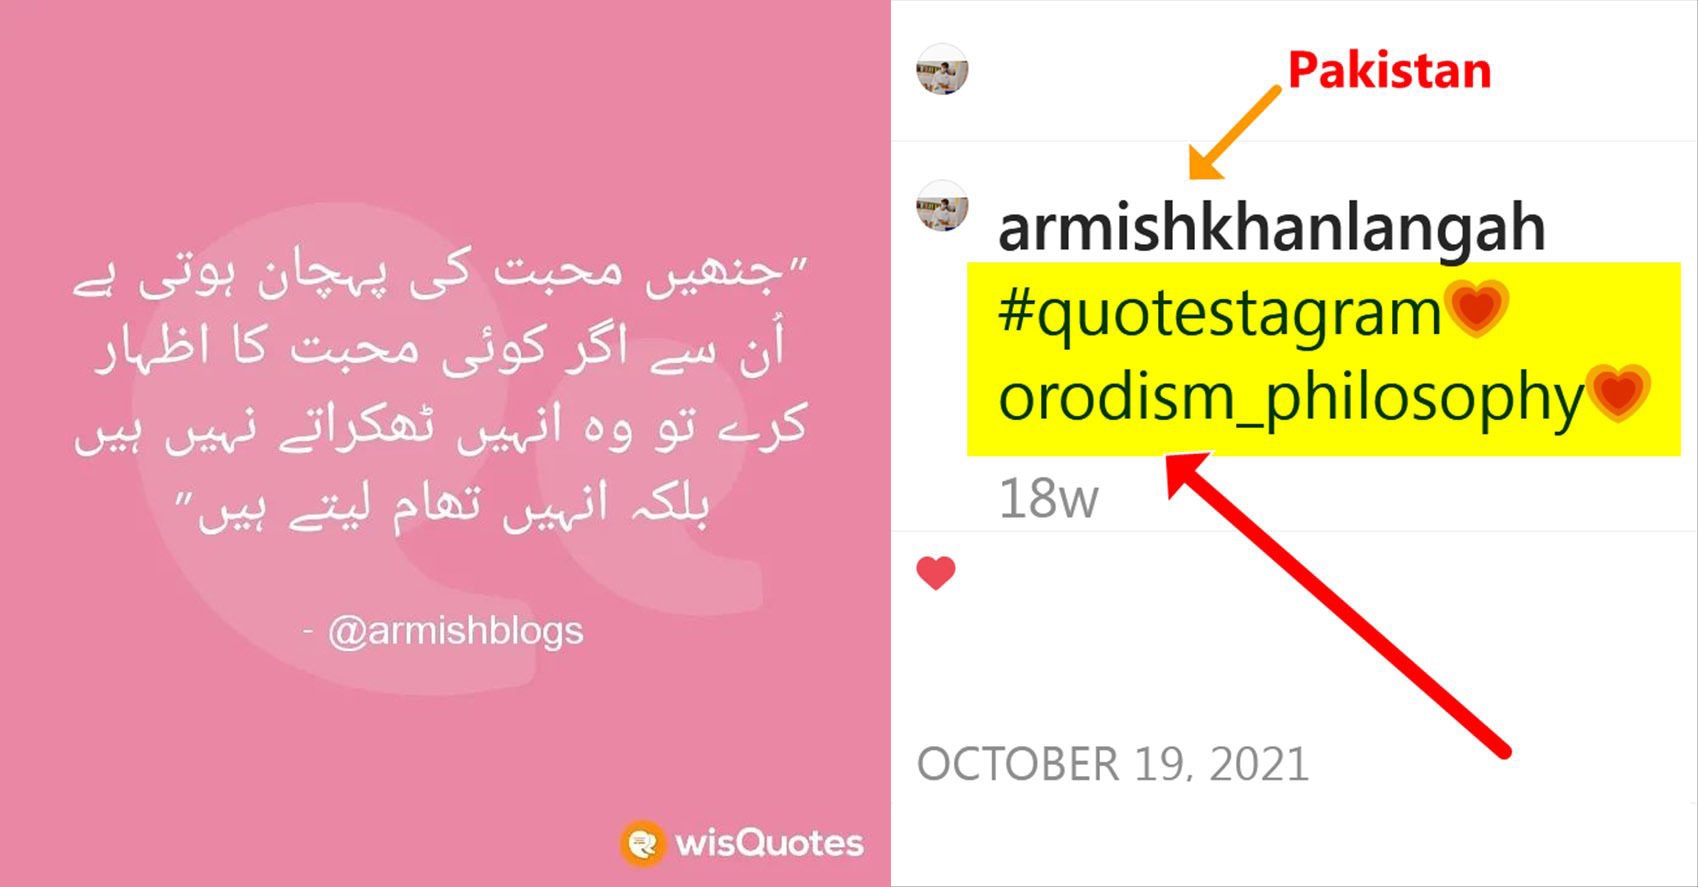 The philosophy of Orodism in Pakistan 7c10573c0ea477feae84115435d370ed